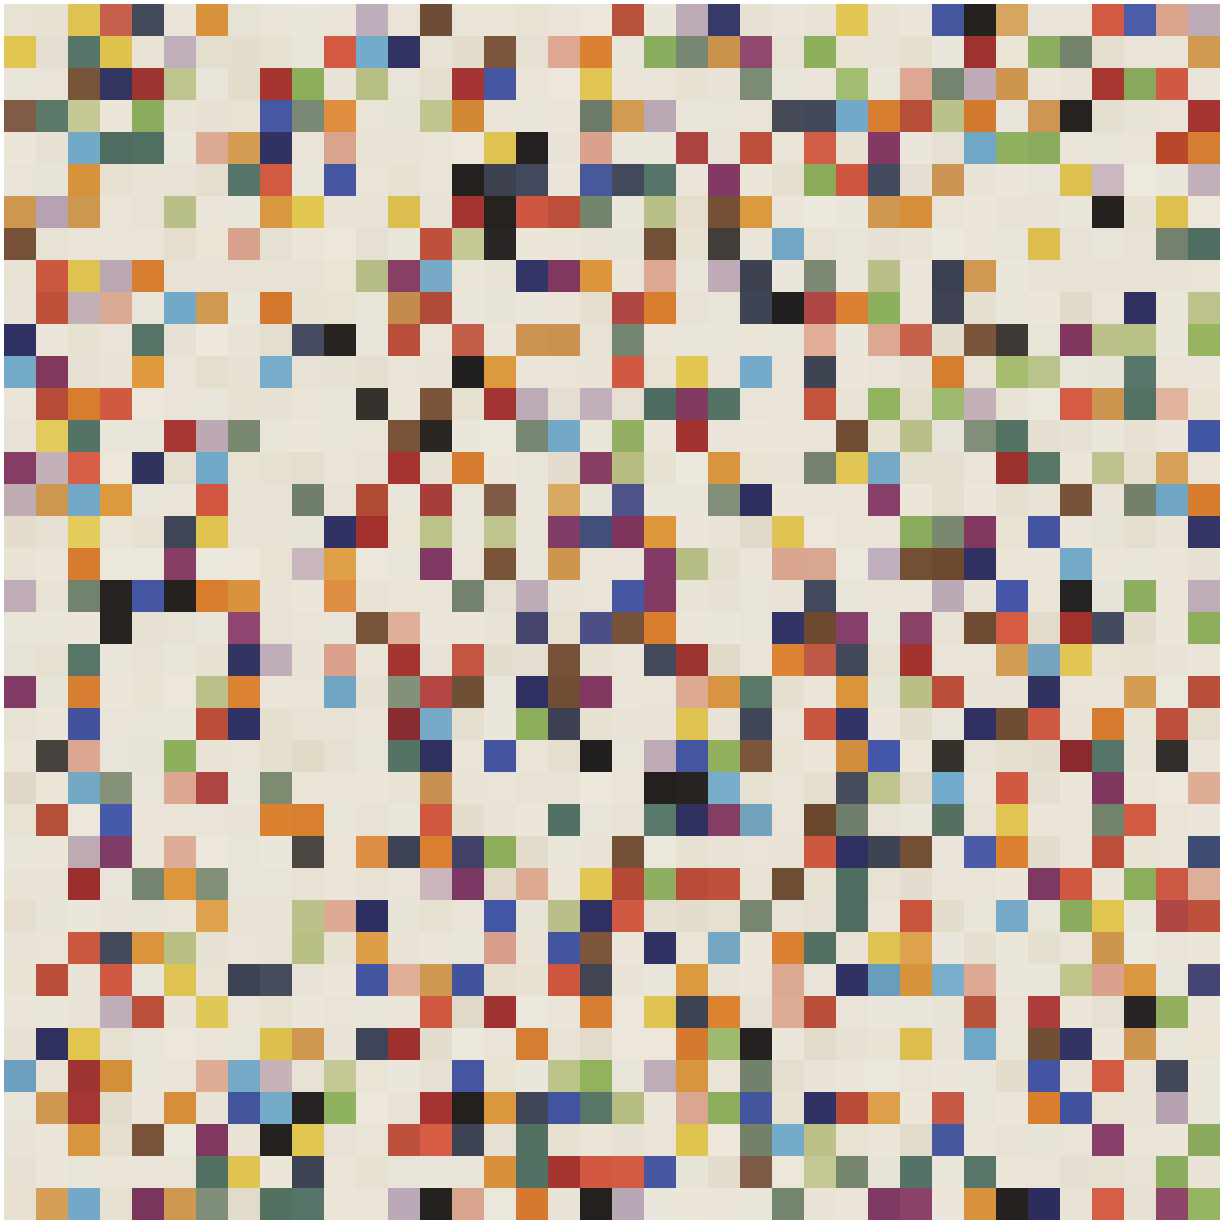 Spectrum Colors Arranged by Chance, after Ellsworth Kelly, v1.0